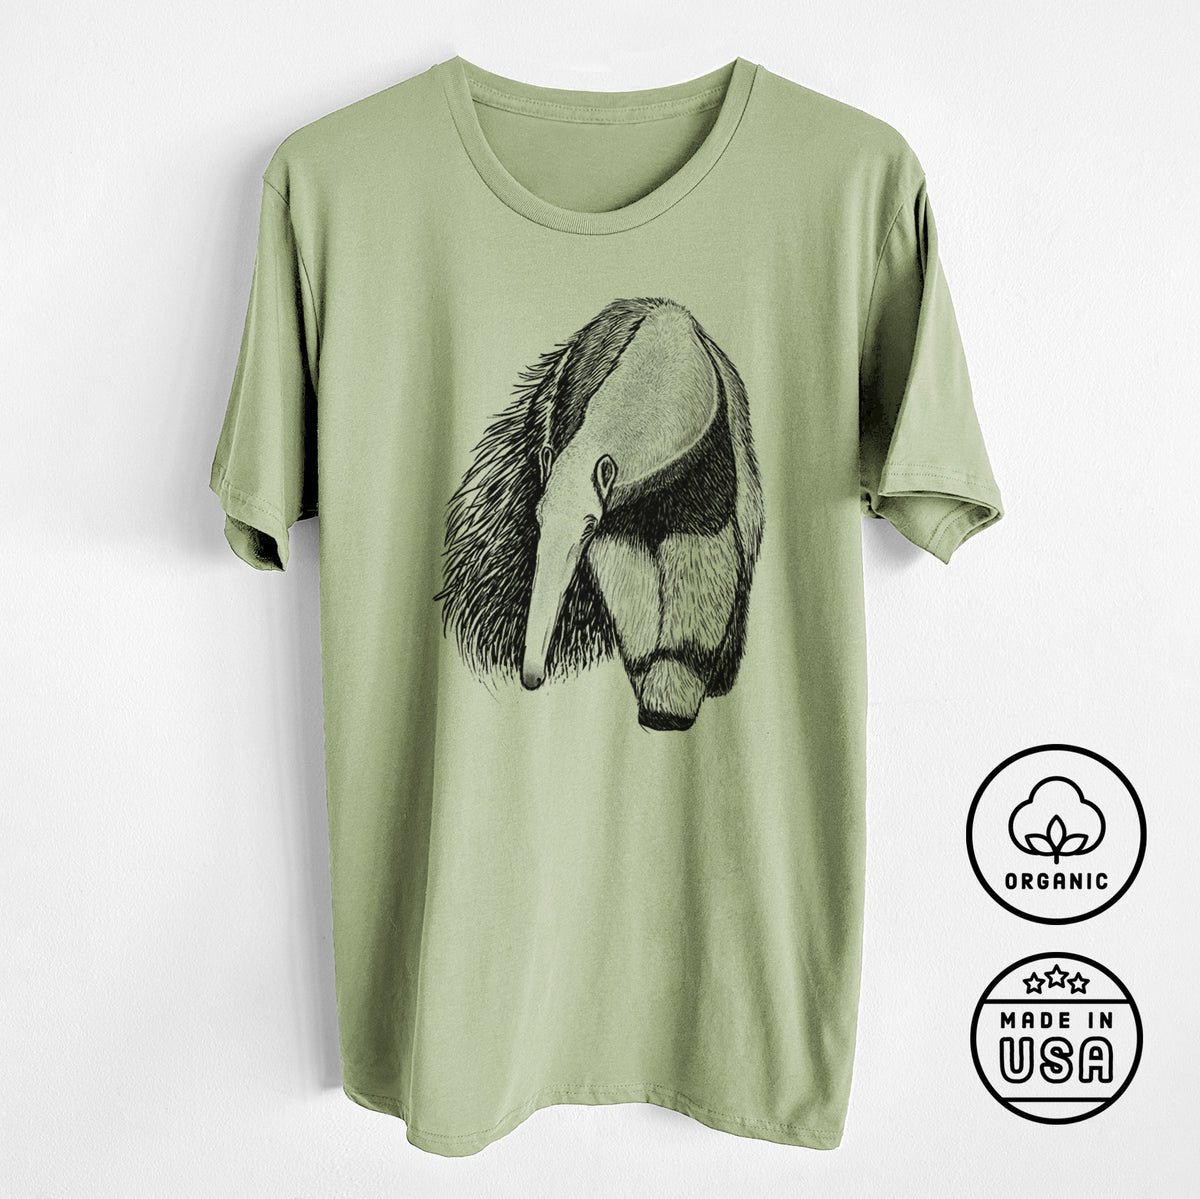 Giant Anteater - Myrmecophaga tridactyla - Unisex Crewneck - Made in USA - 100% Organic Cotton